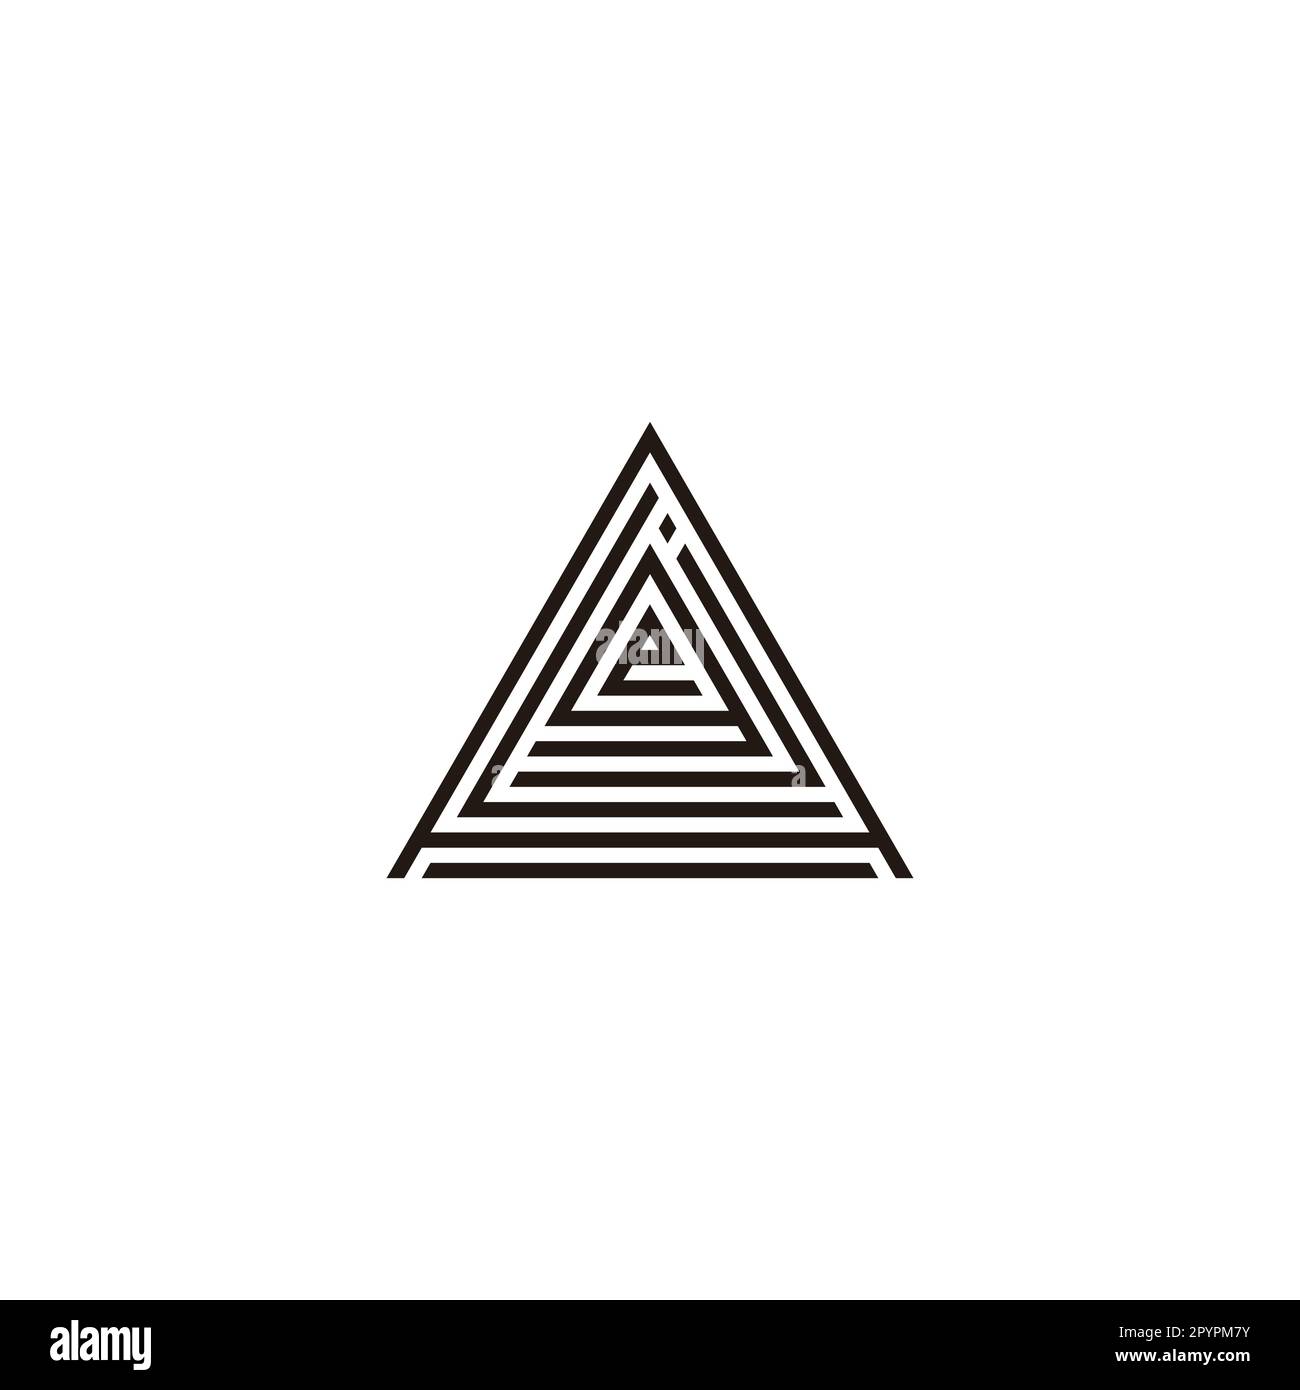 Letter A, L, j, g and e triangle line geometric symbol simple logo ...